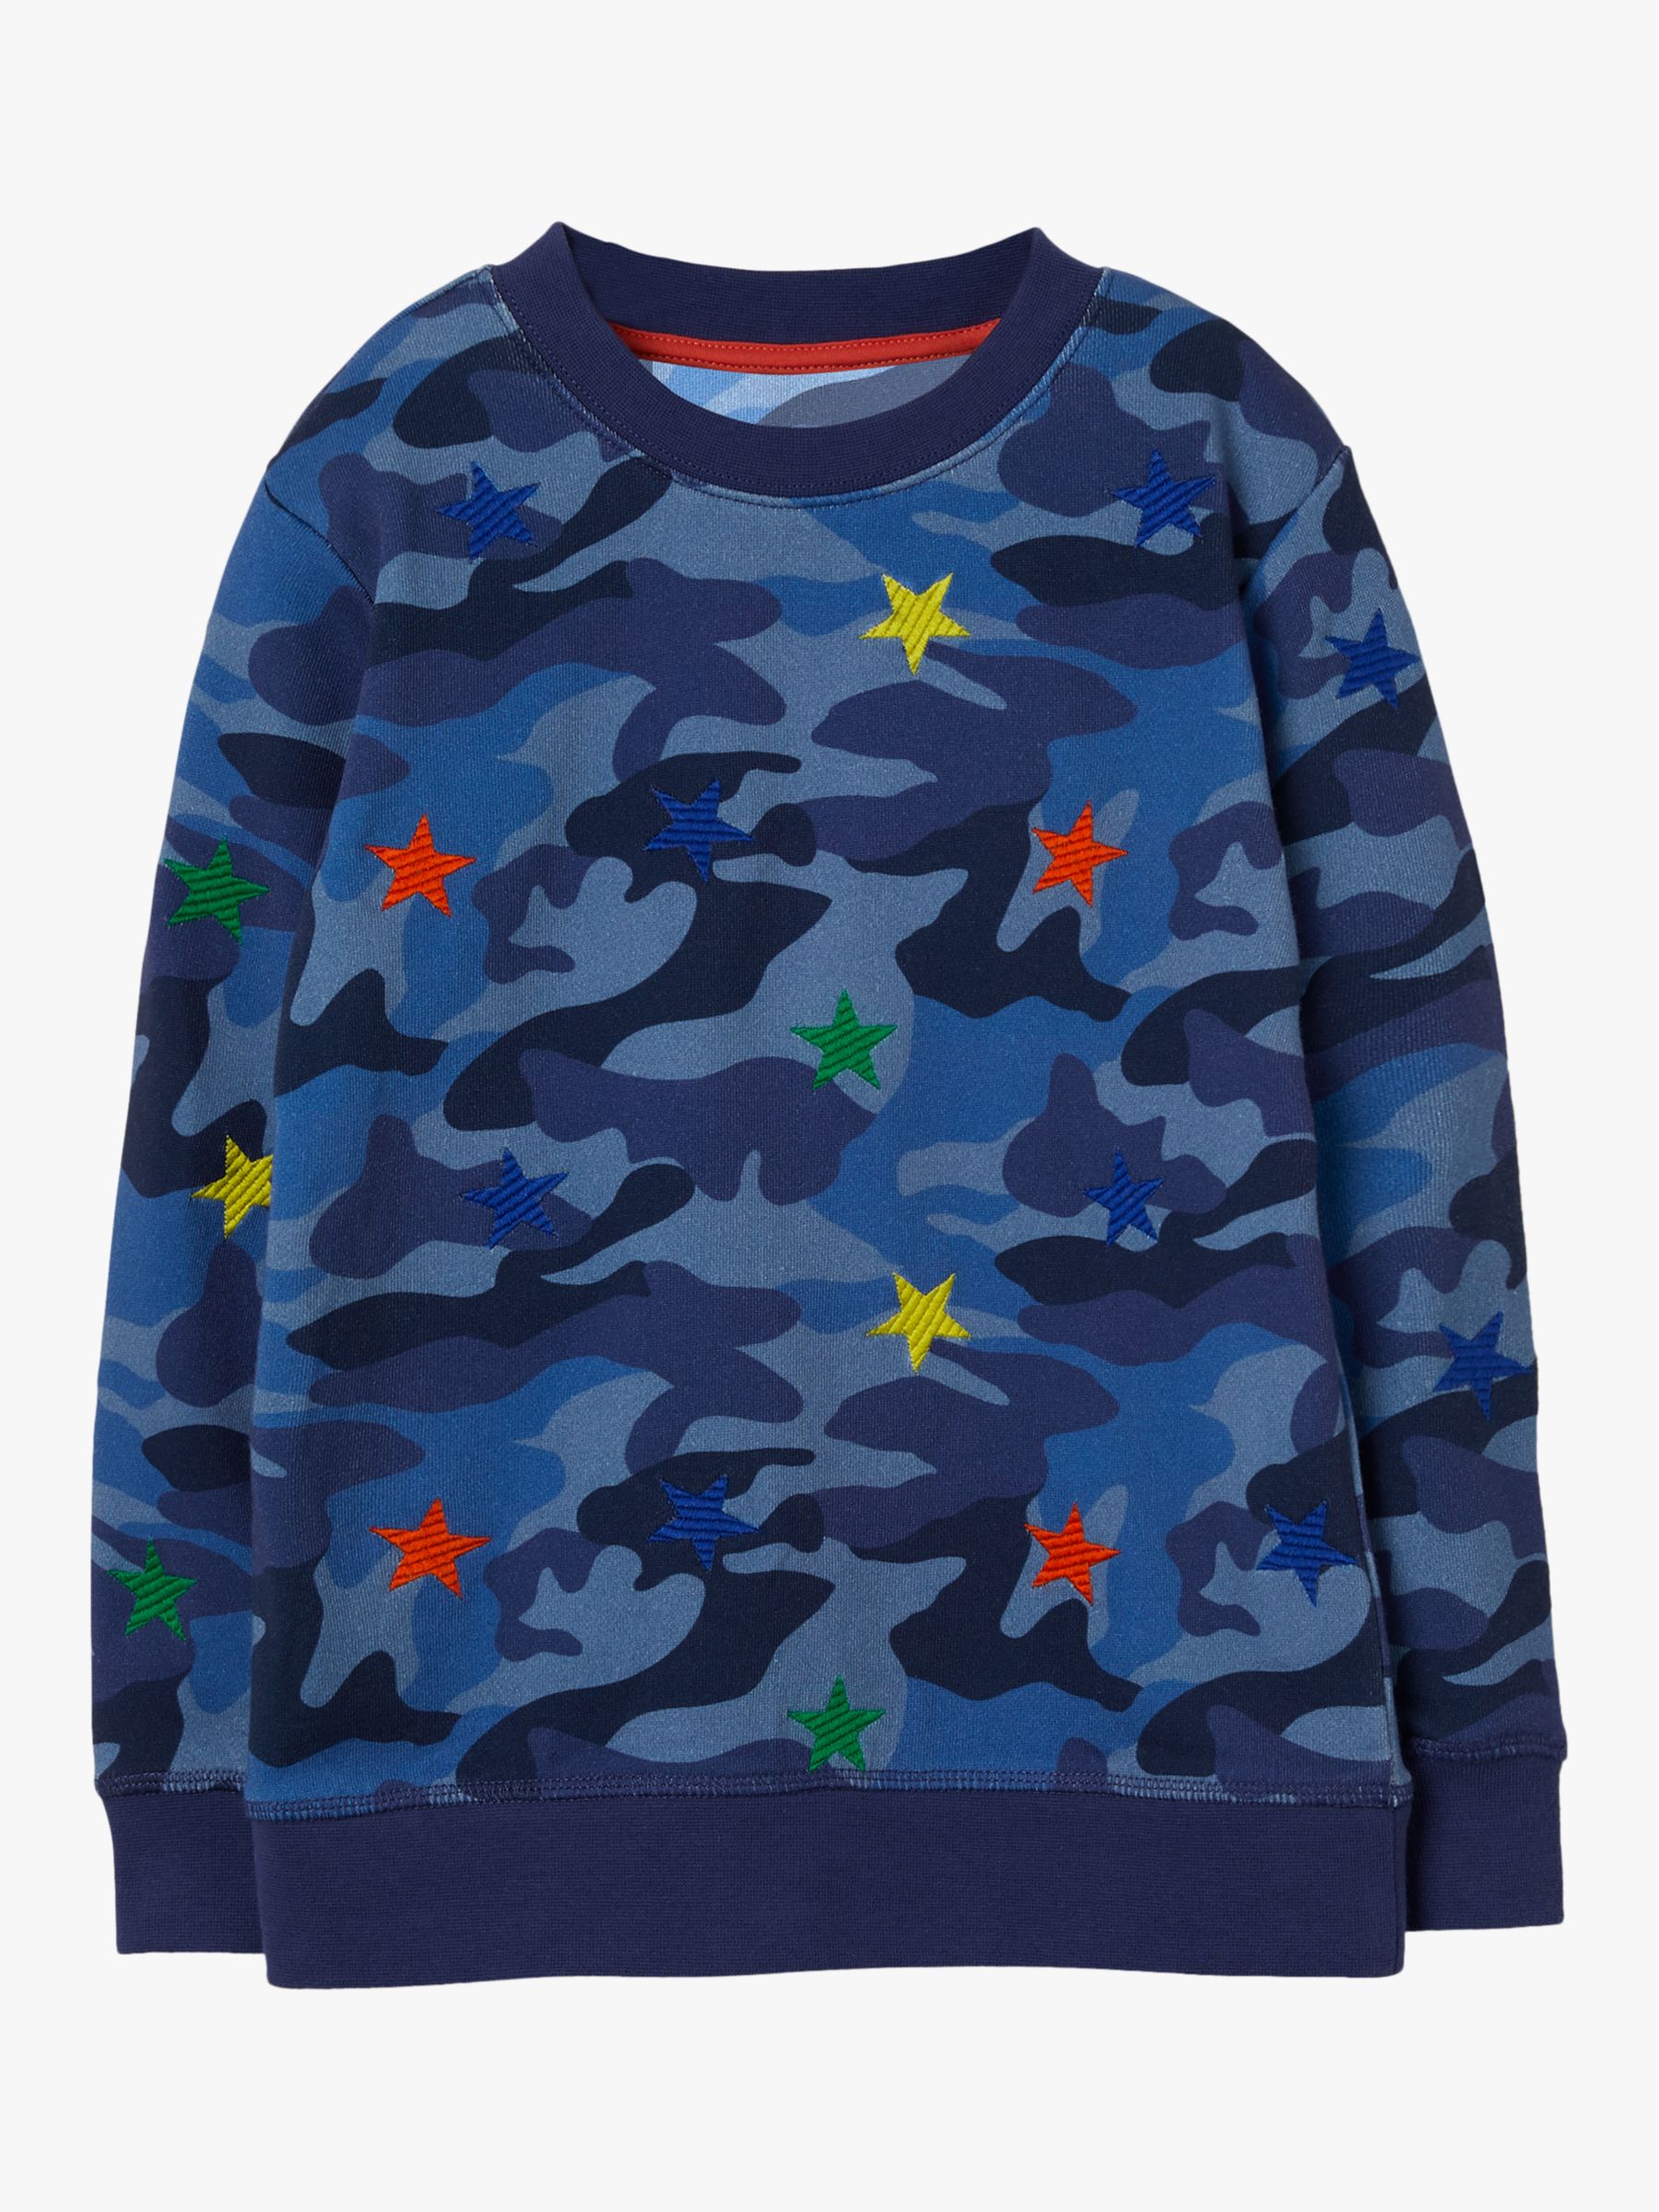 Mini Boden Kids' Embroidered Star Camo Print Sweatshirt, Blue